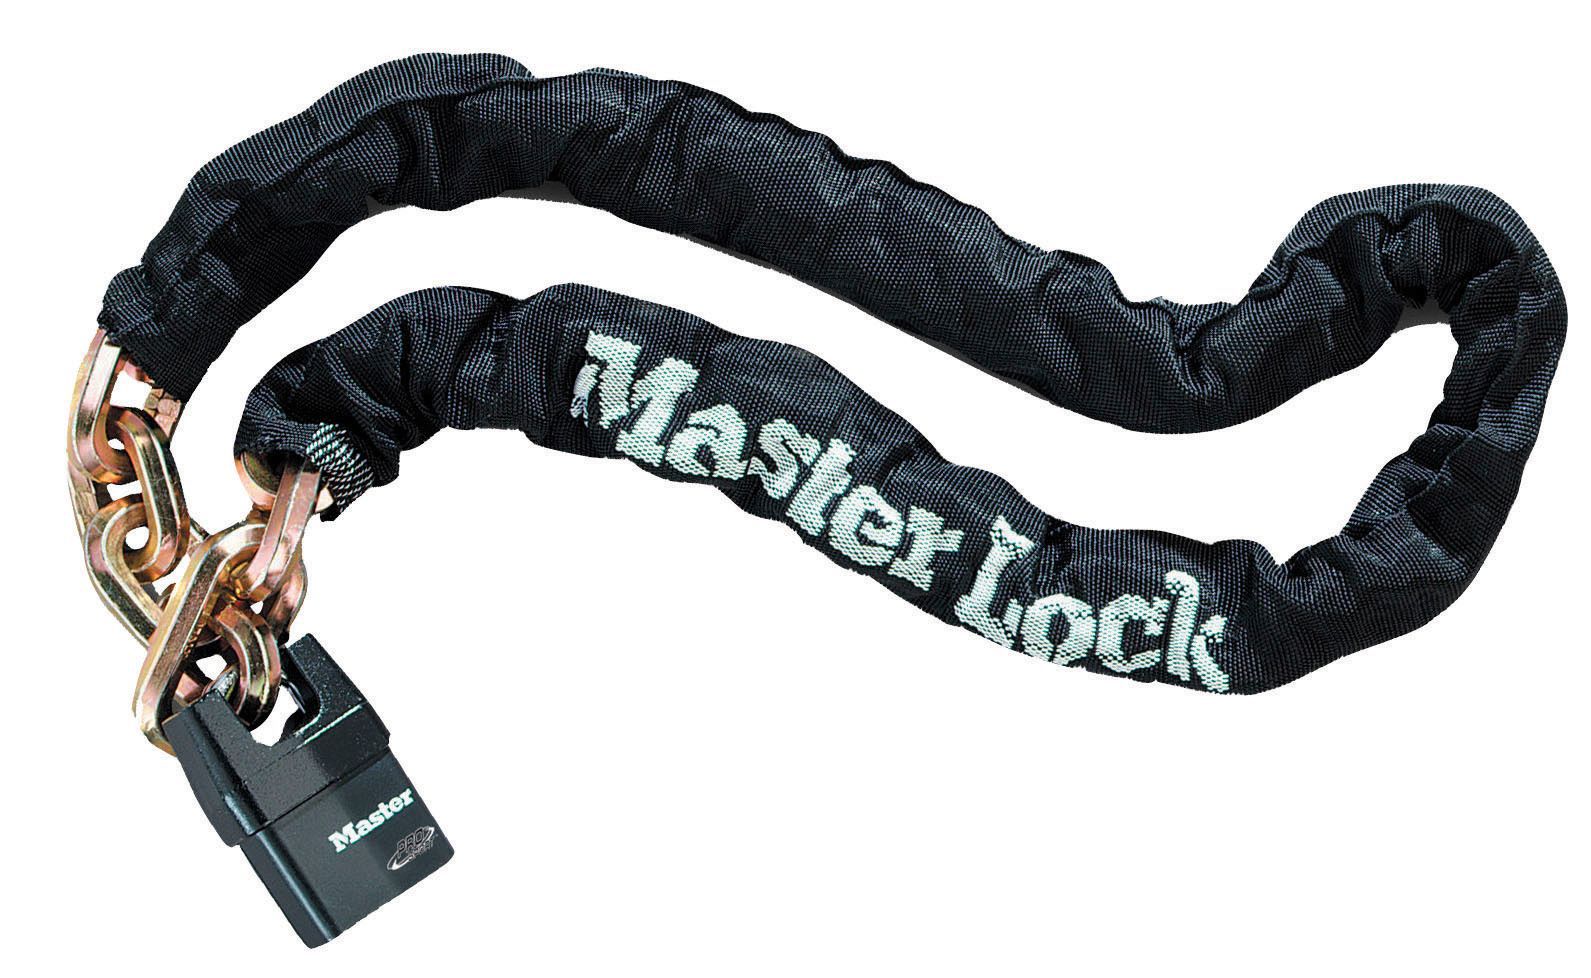 master chain lock